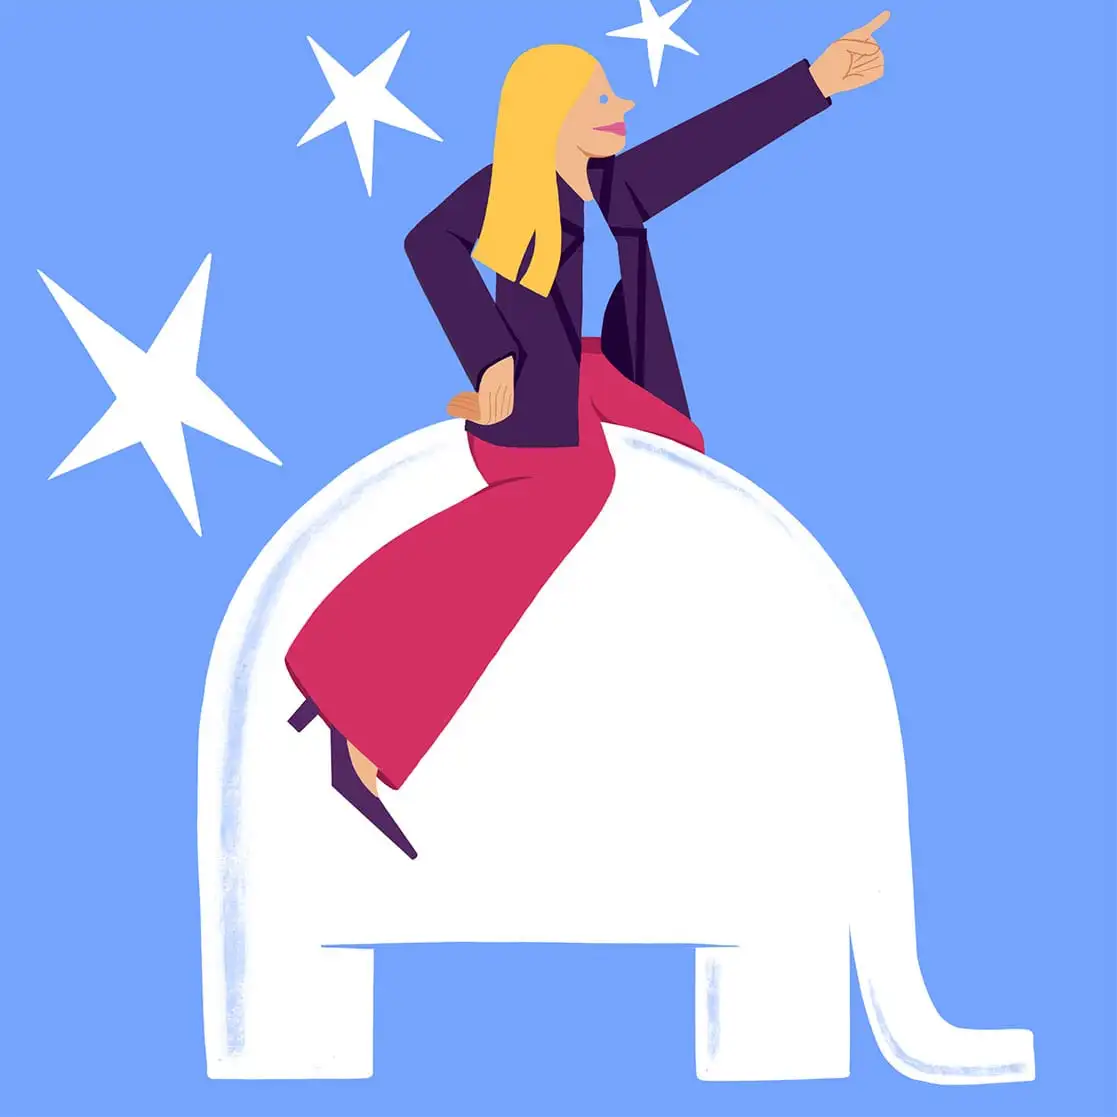 Illustration of a woman riding an elephant